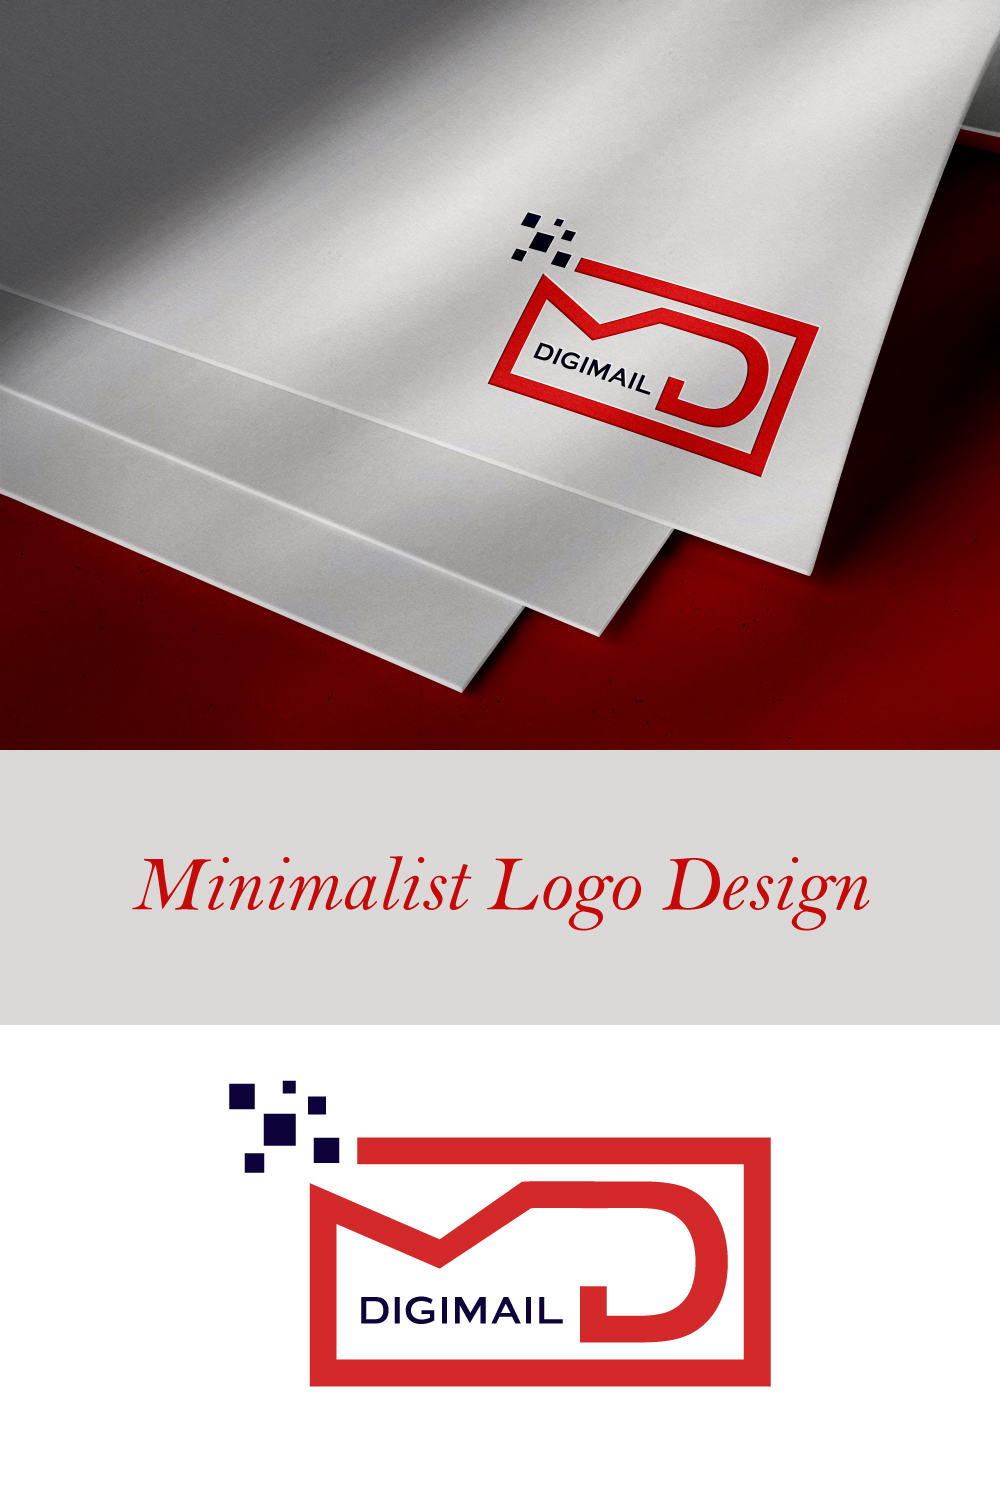 Digimail Red Logo Design Template Pinterest image.